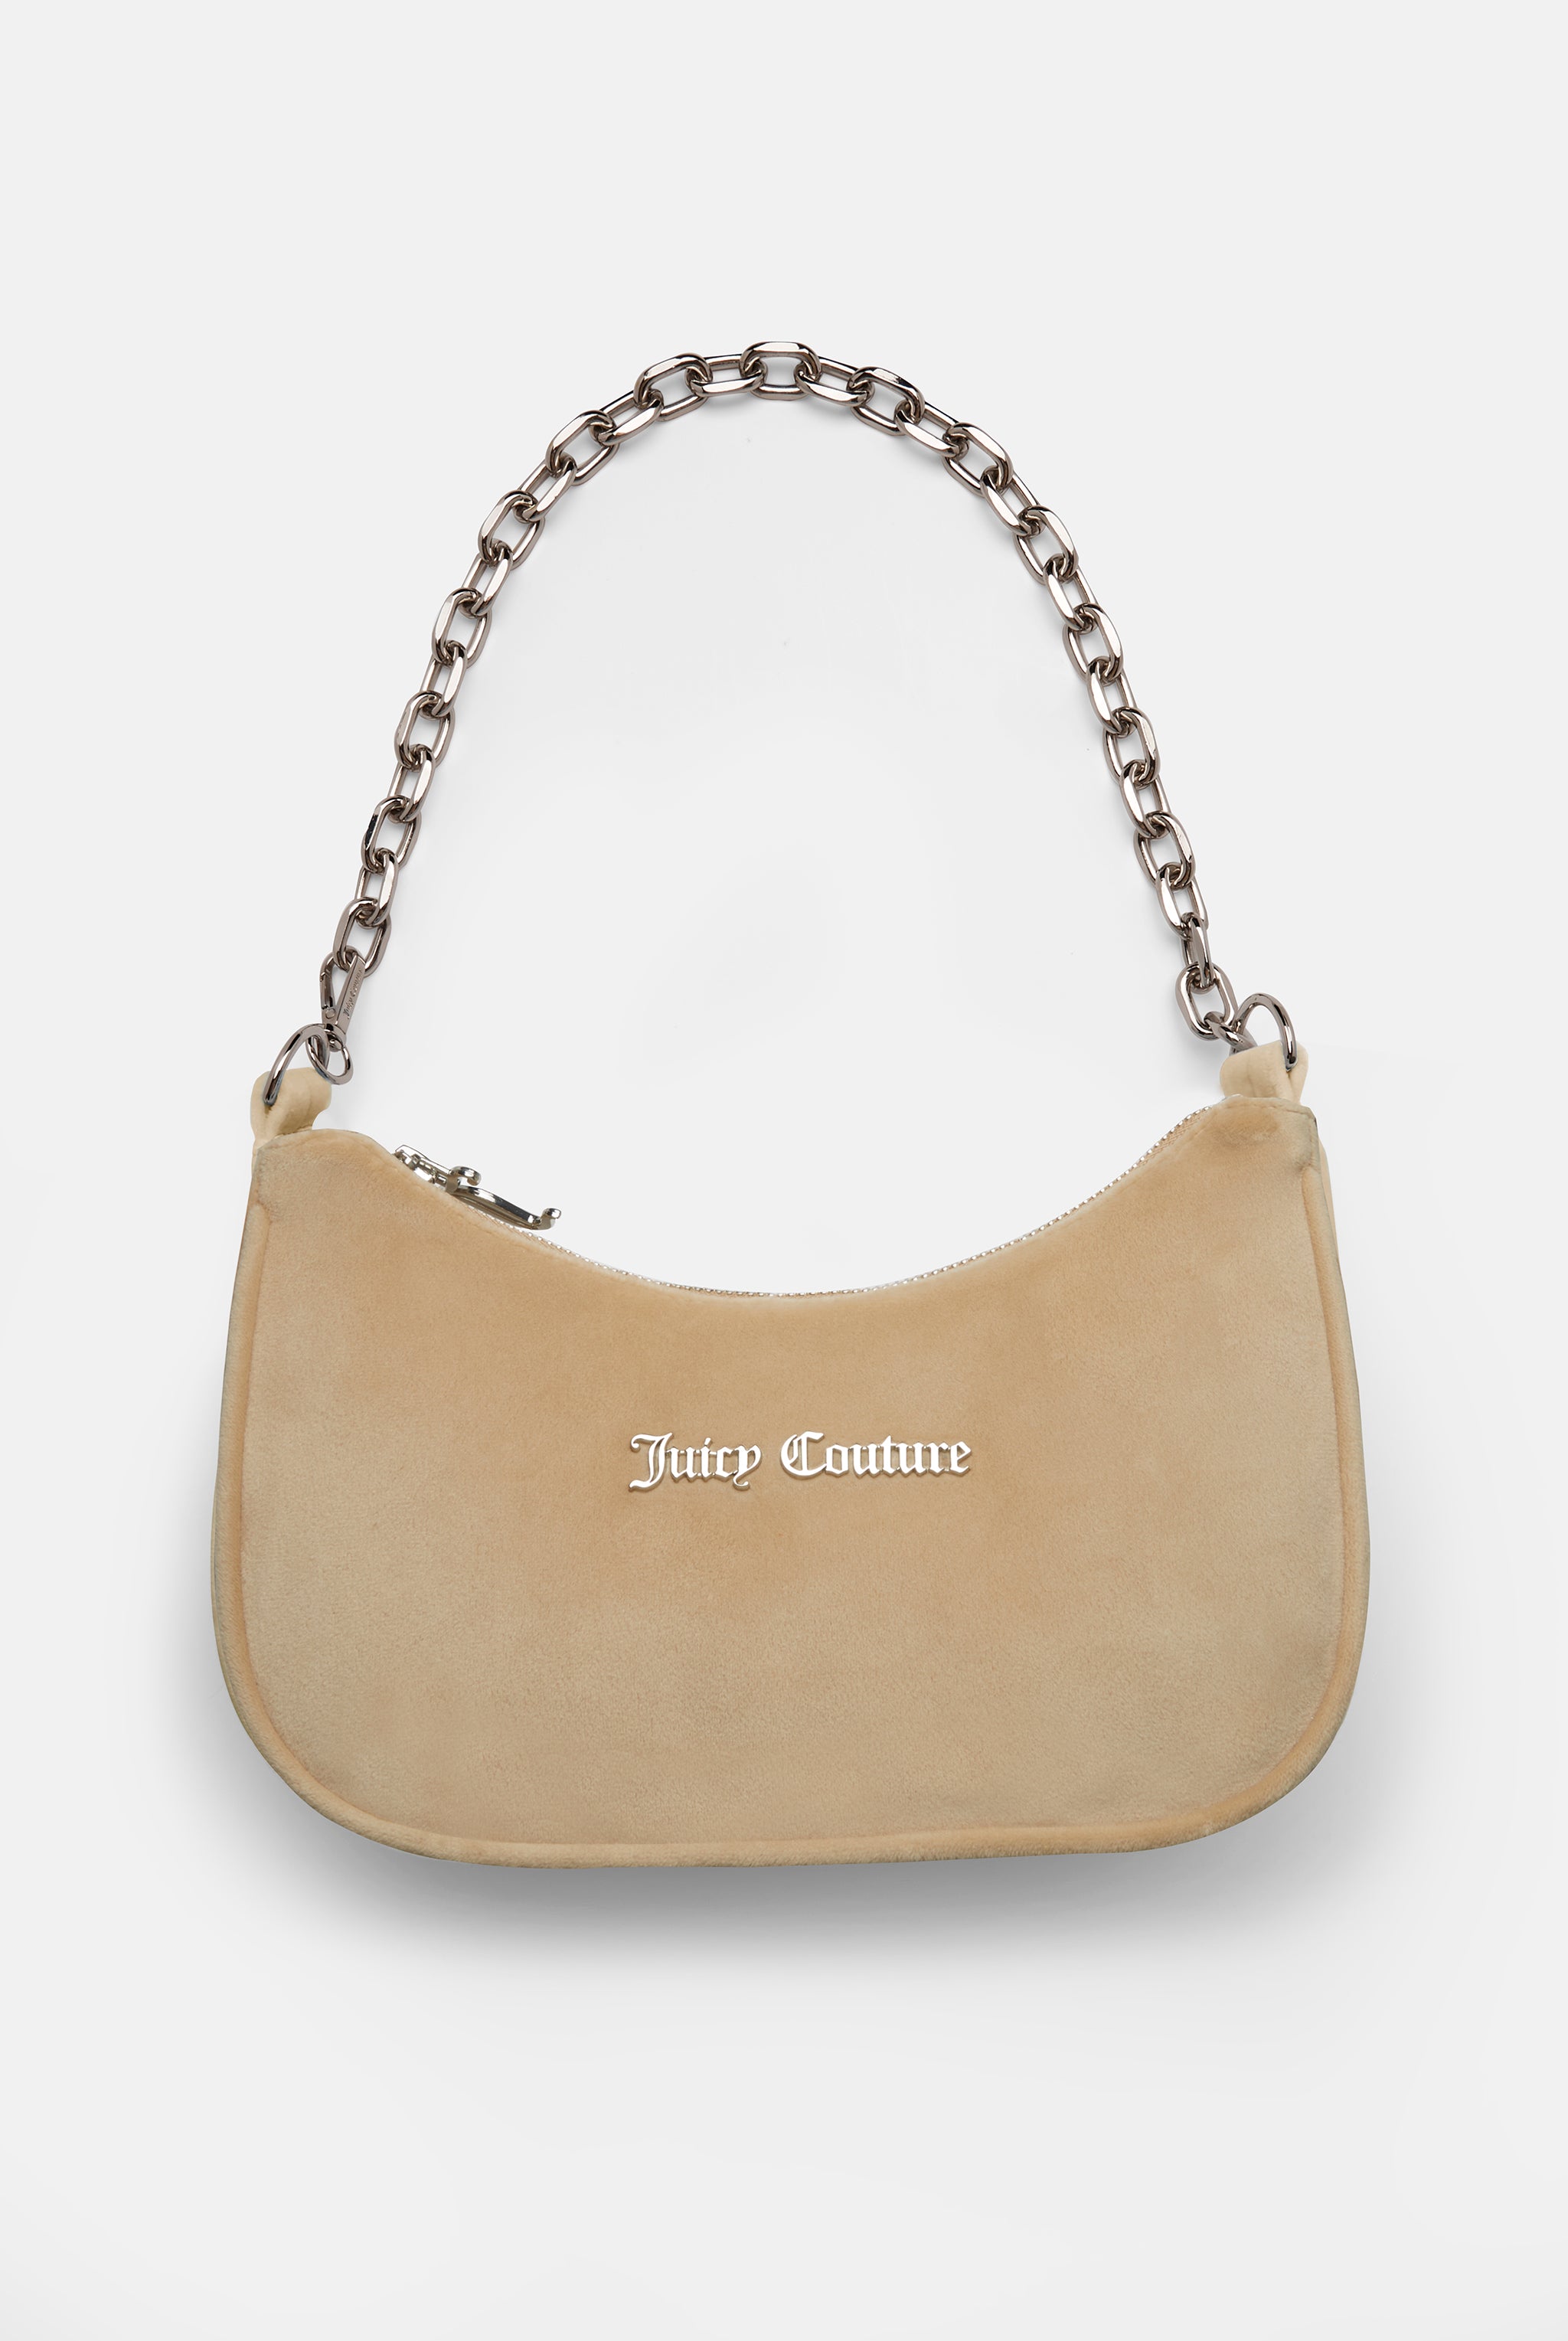 Blue Velvet Juicy Couture Handbag - Gem